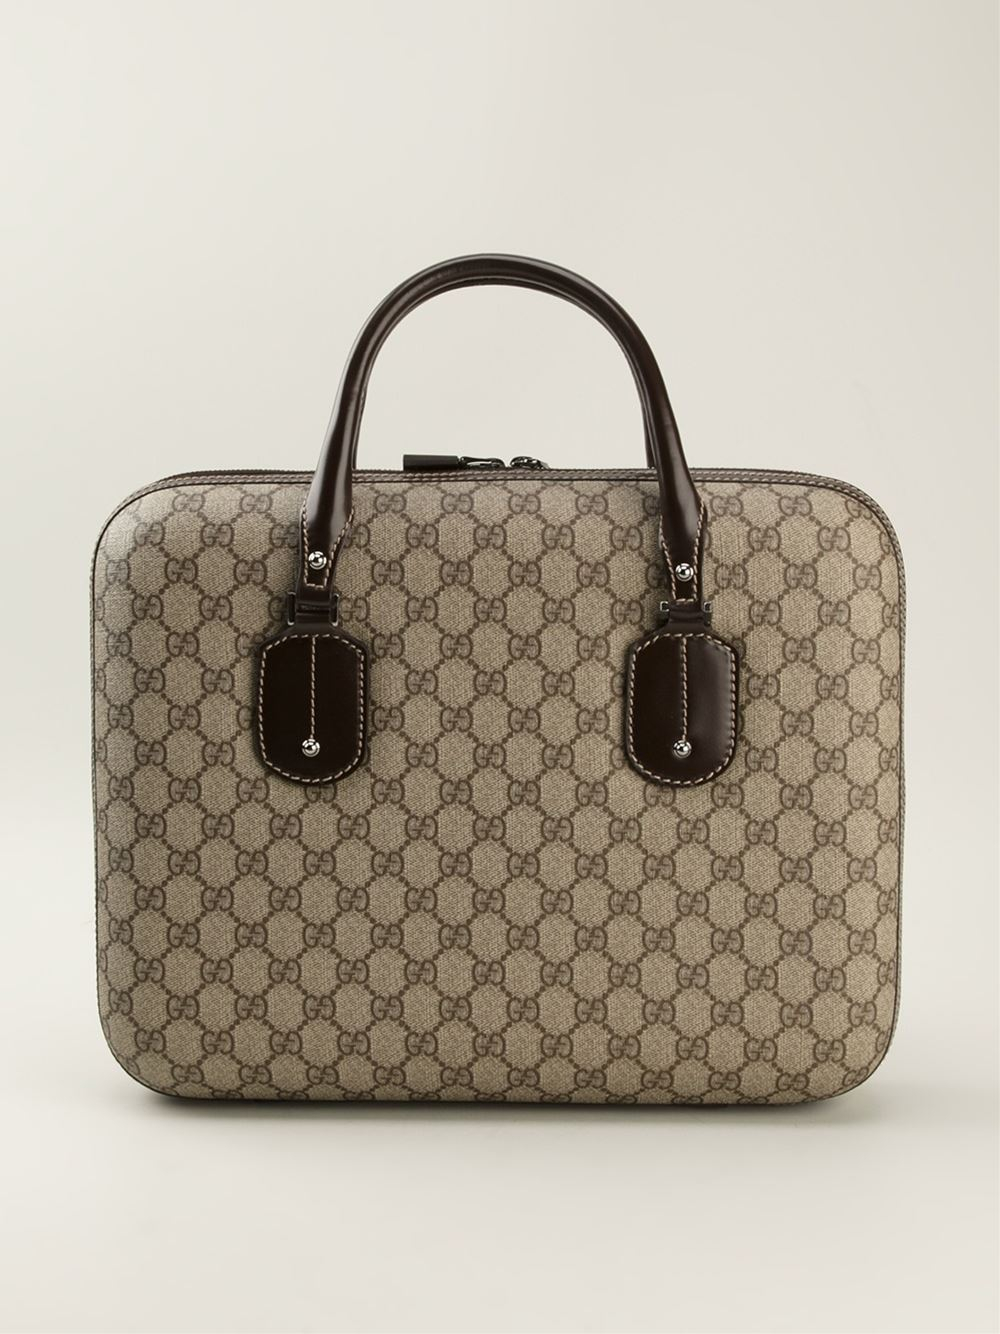 Gucci Signature Monogram Laptop Bag in Natural - Lyst